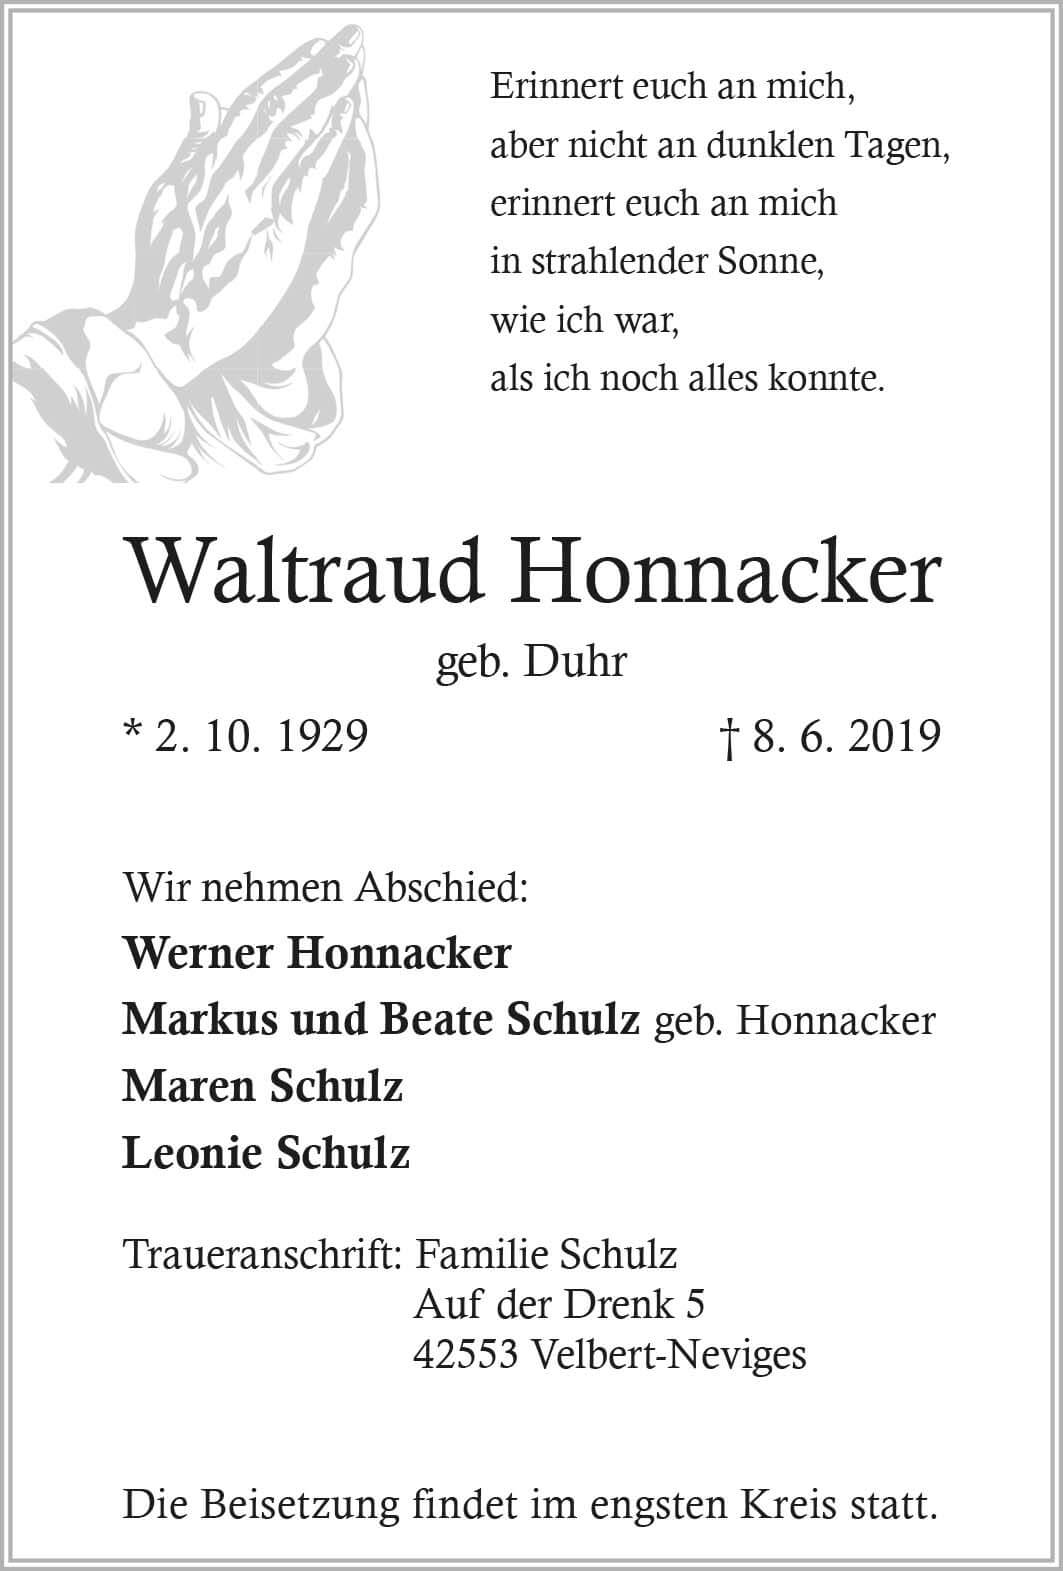 Waltraud Honnacker † 8. 6. 2019